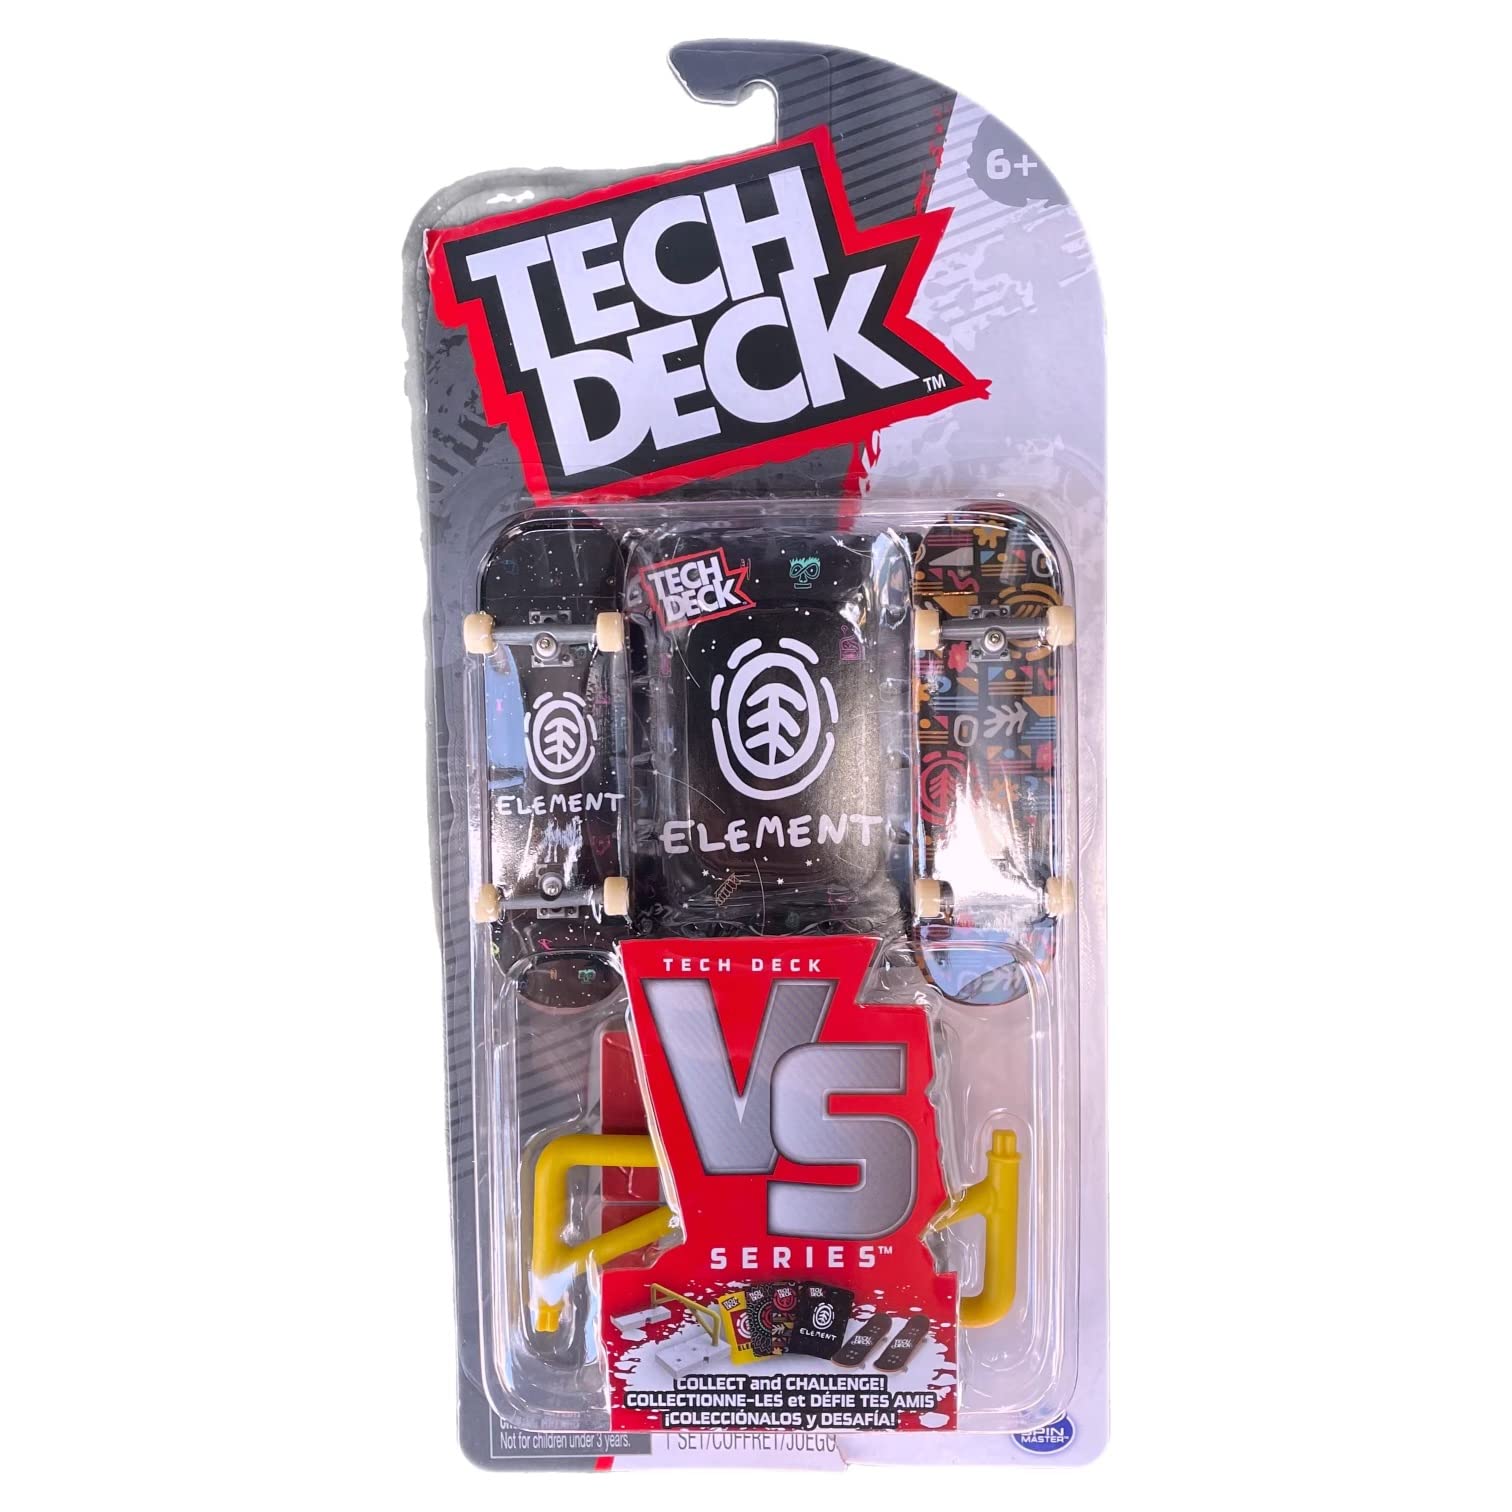 TECH DECK VS Series Sk8shop Mini Skateboard Fingerboard, Obstacle & Challenge Set 2022 (DGK - Alien Workshop - Element) (Element)